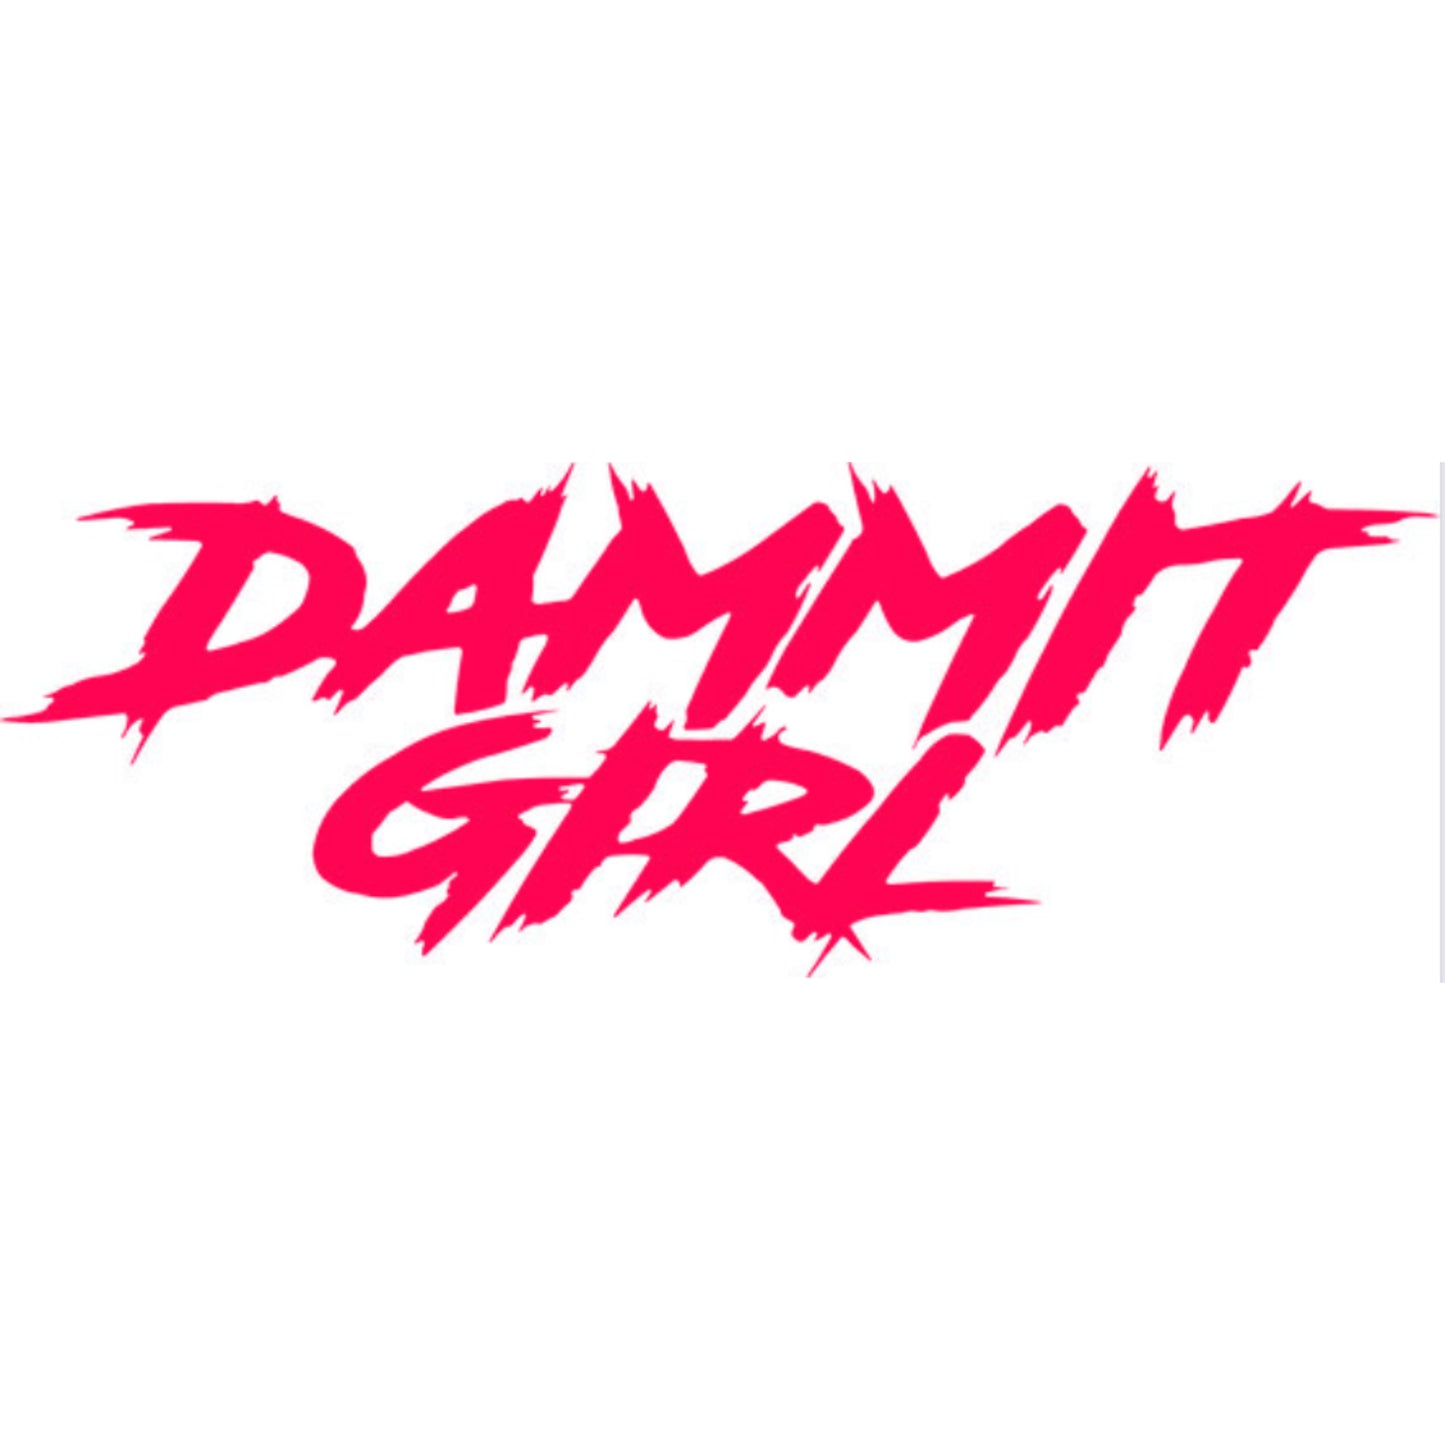 "DAMMMIT GIRL" DECAL